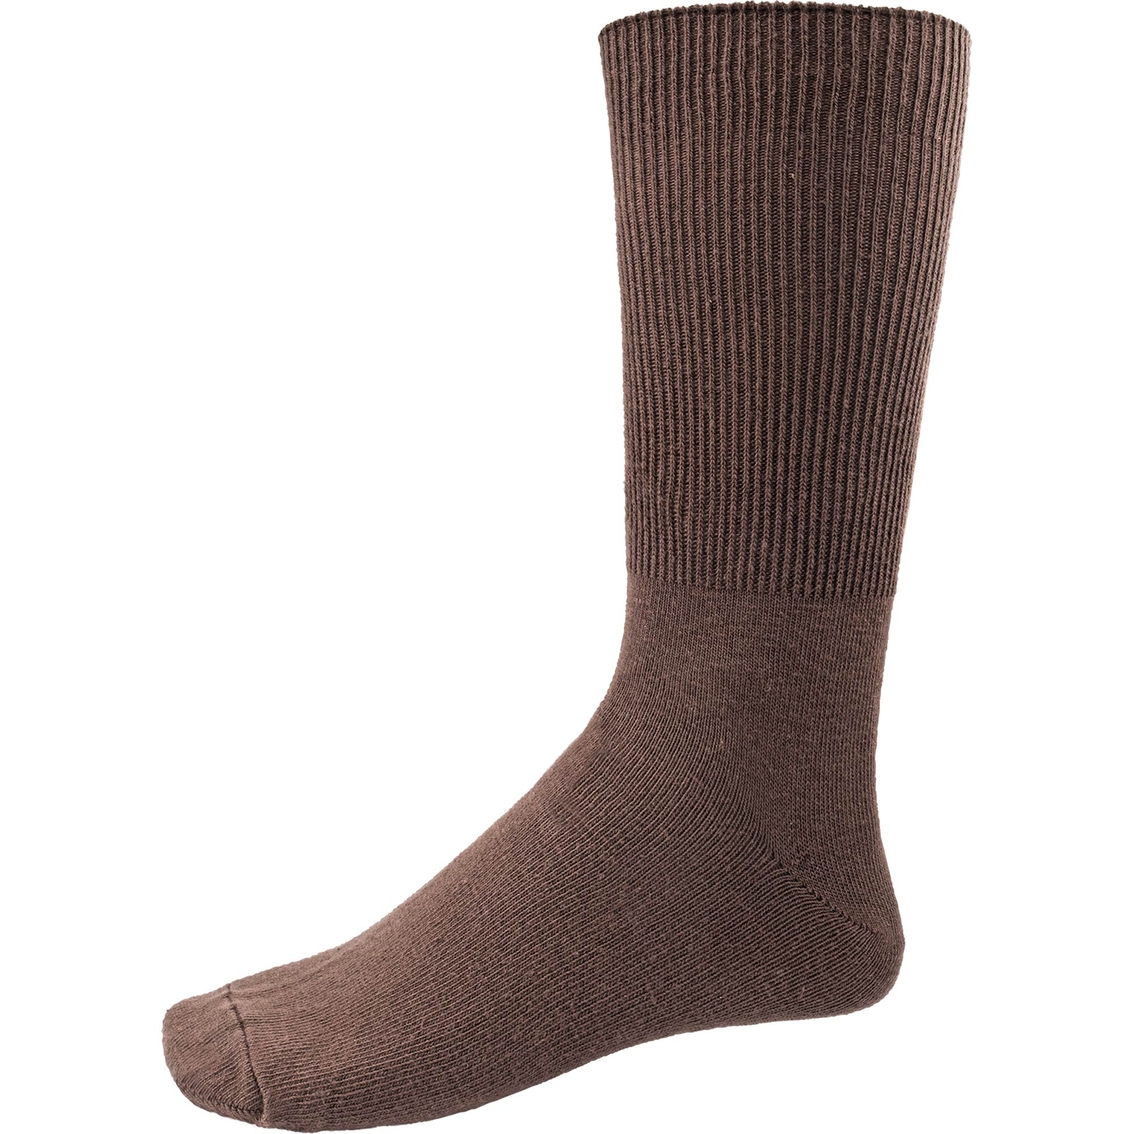 Dlats Men's / Women's Socks (agsu) | Uniforms | Military | Shop The ...